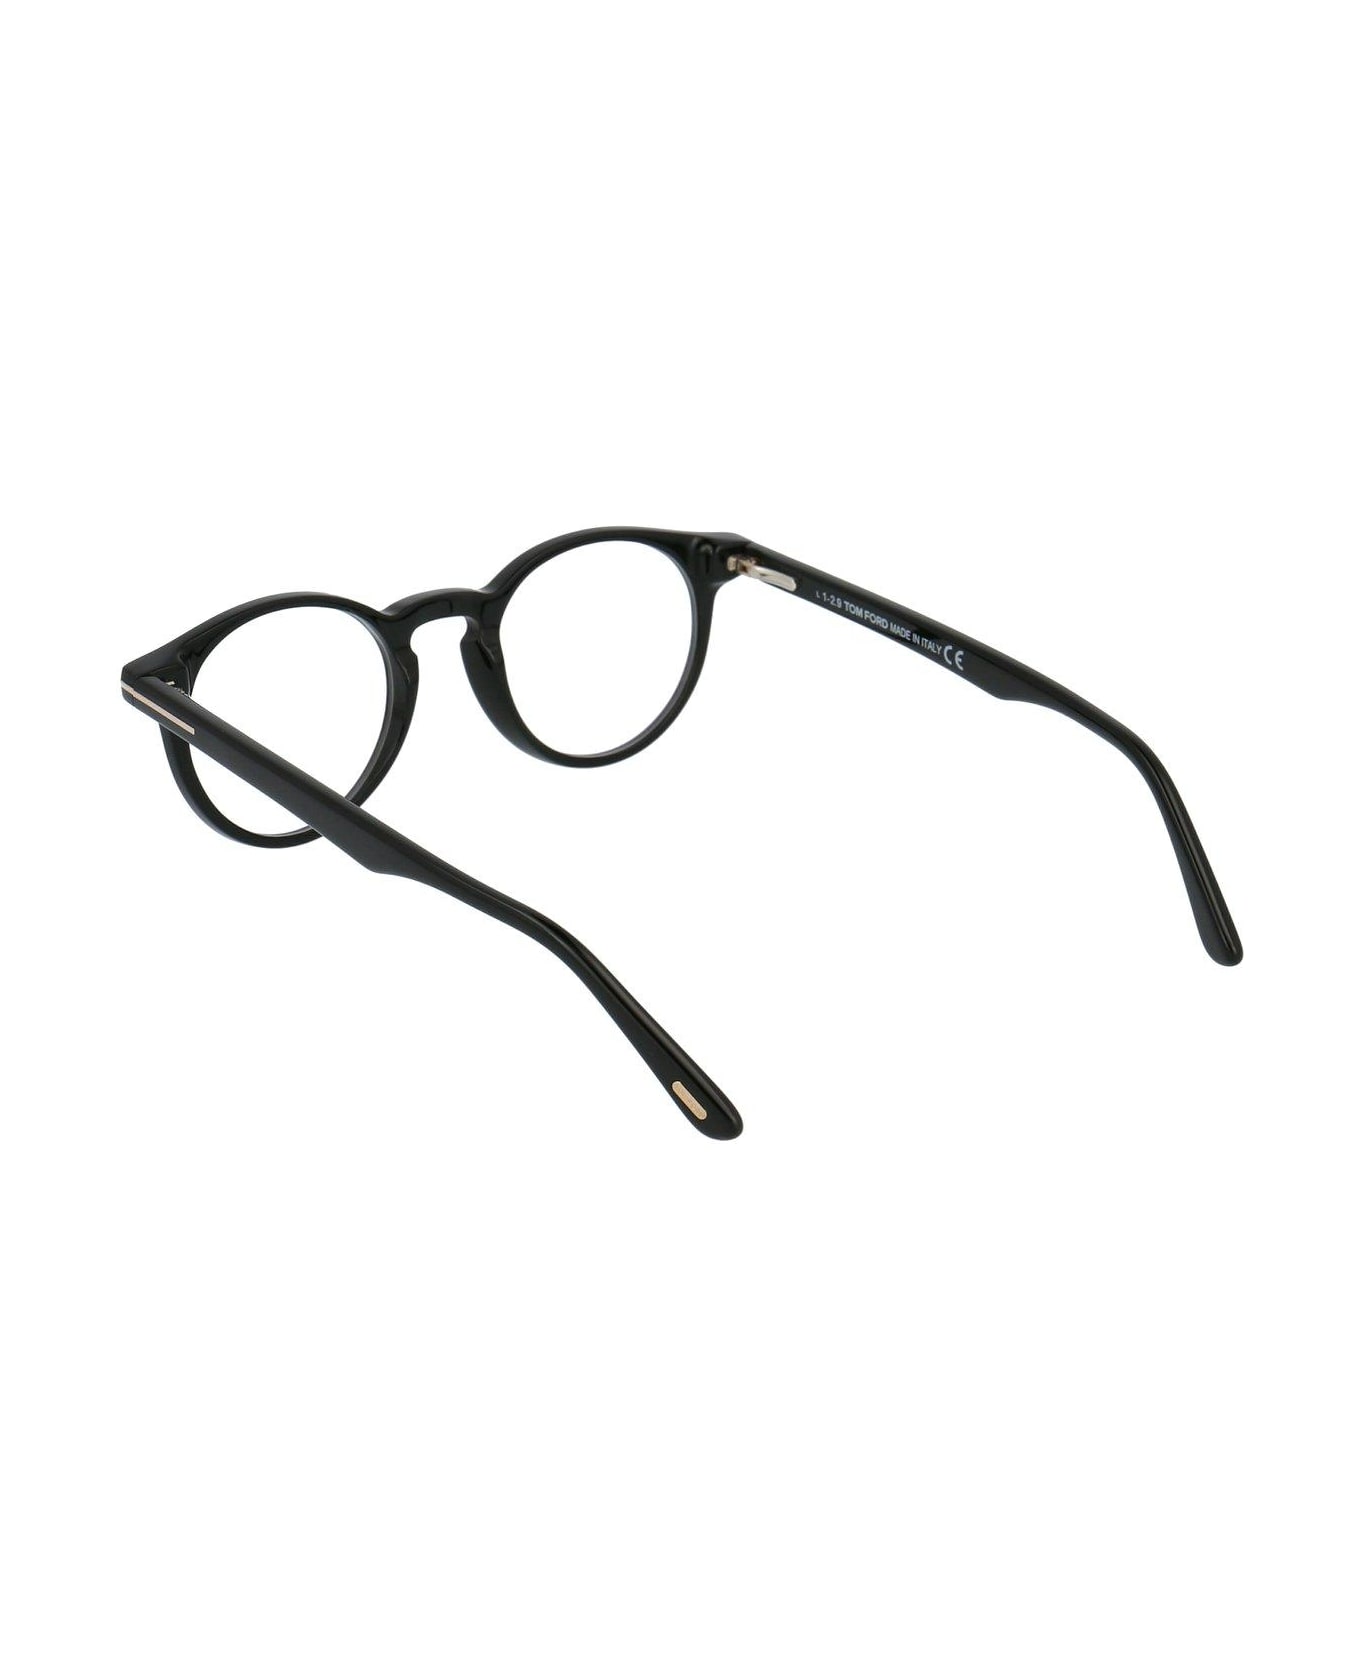 Tom Ford Eyewear Round Frame Glasses Glasses - 001 Nero Lucido アイウェア